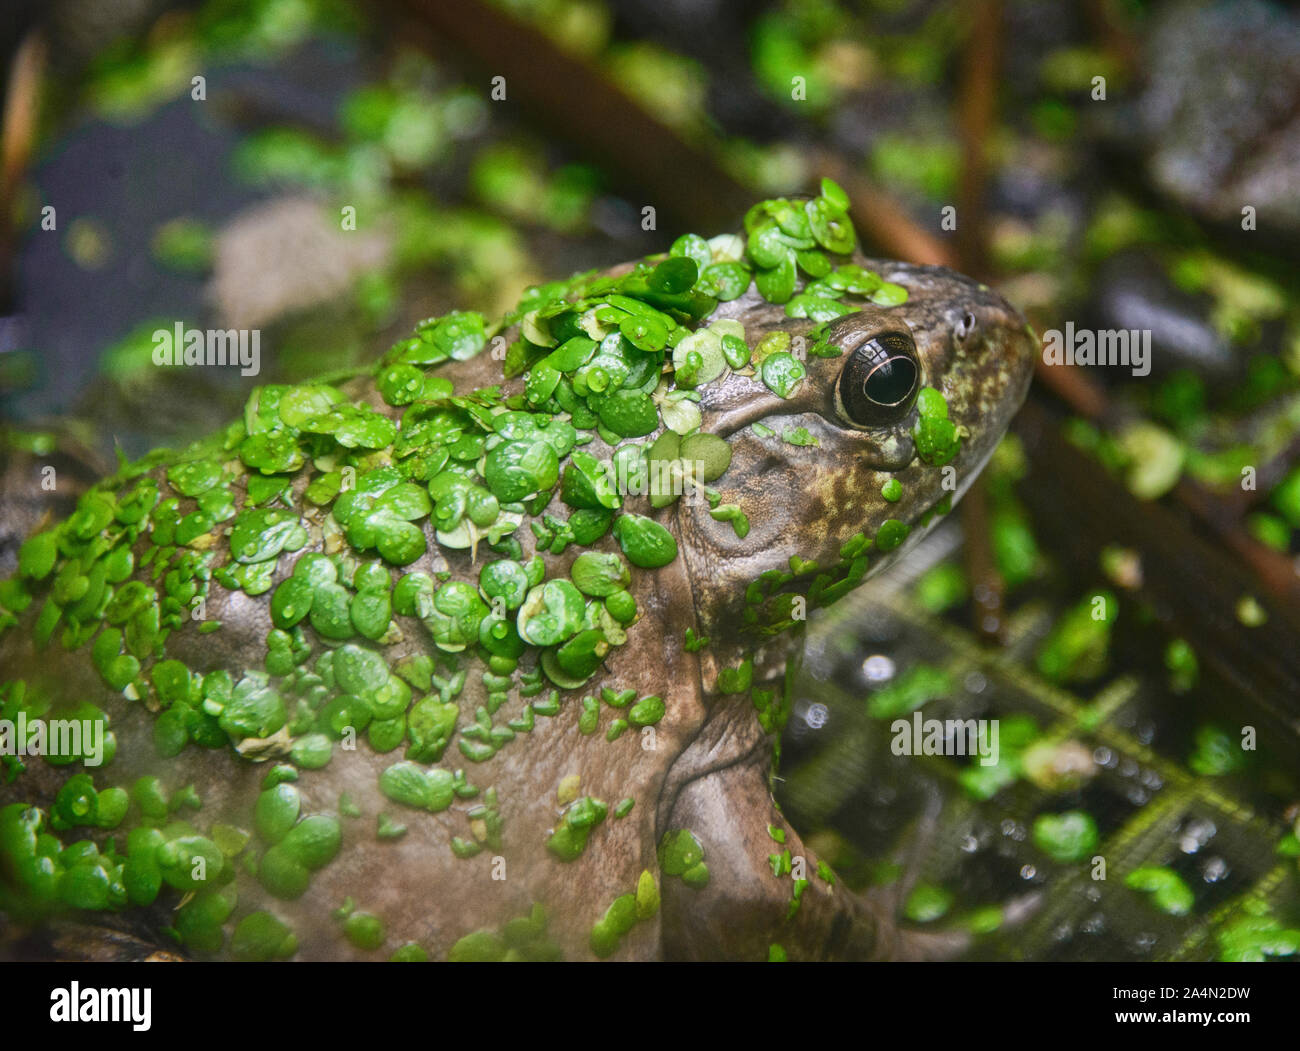 American bullfrog (Lithobates catesbeianus), Amaru Biopark, Cuenca, Ecuador Stock Photo